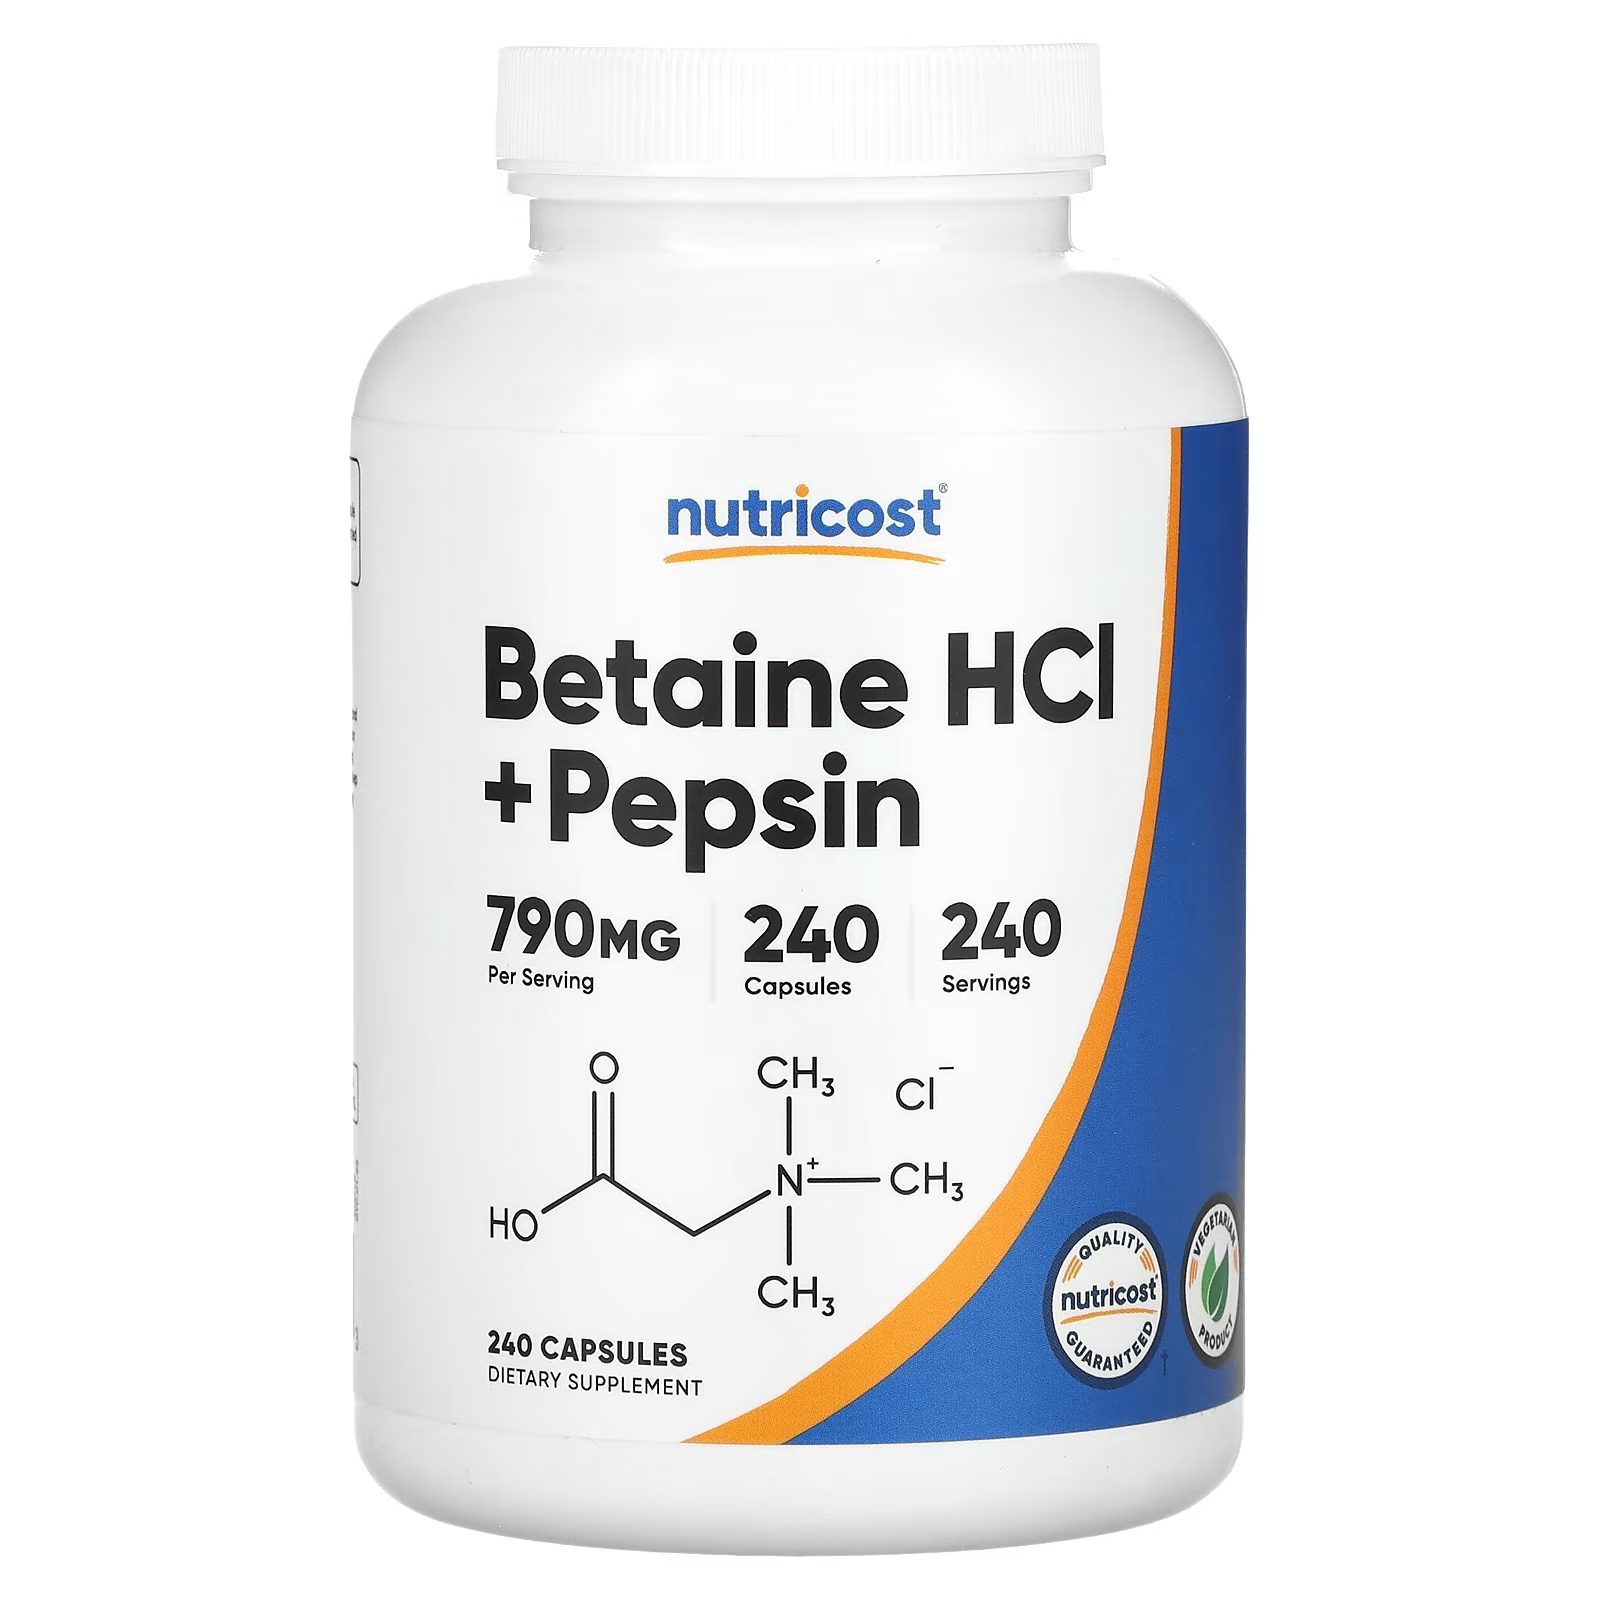 vital nutrients бетаин гидрохлорид пепсин экстракт корня горечавки 225 капсул Пищевая добавка Nutricost Бетаин гидрохлорид + пепсин 790 мг, 240 капсул